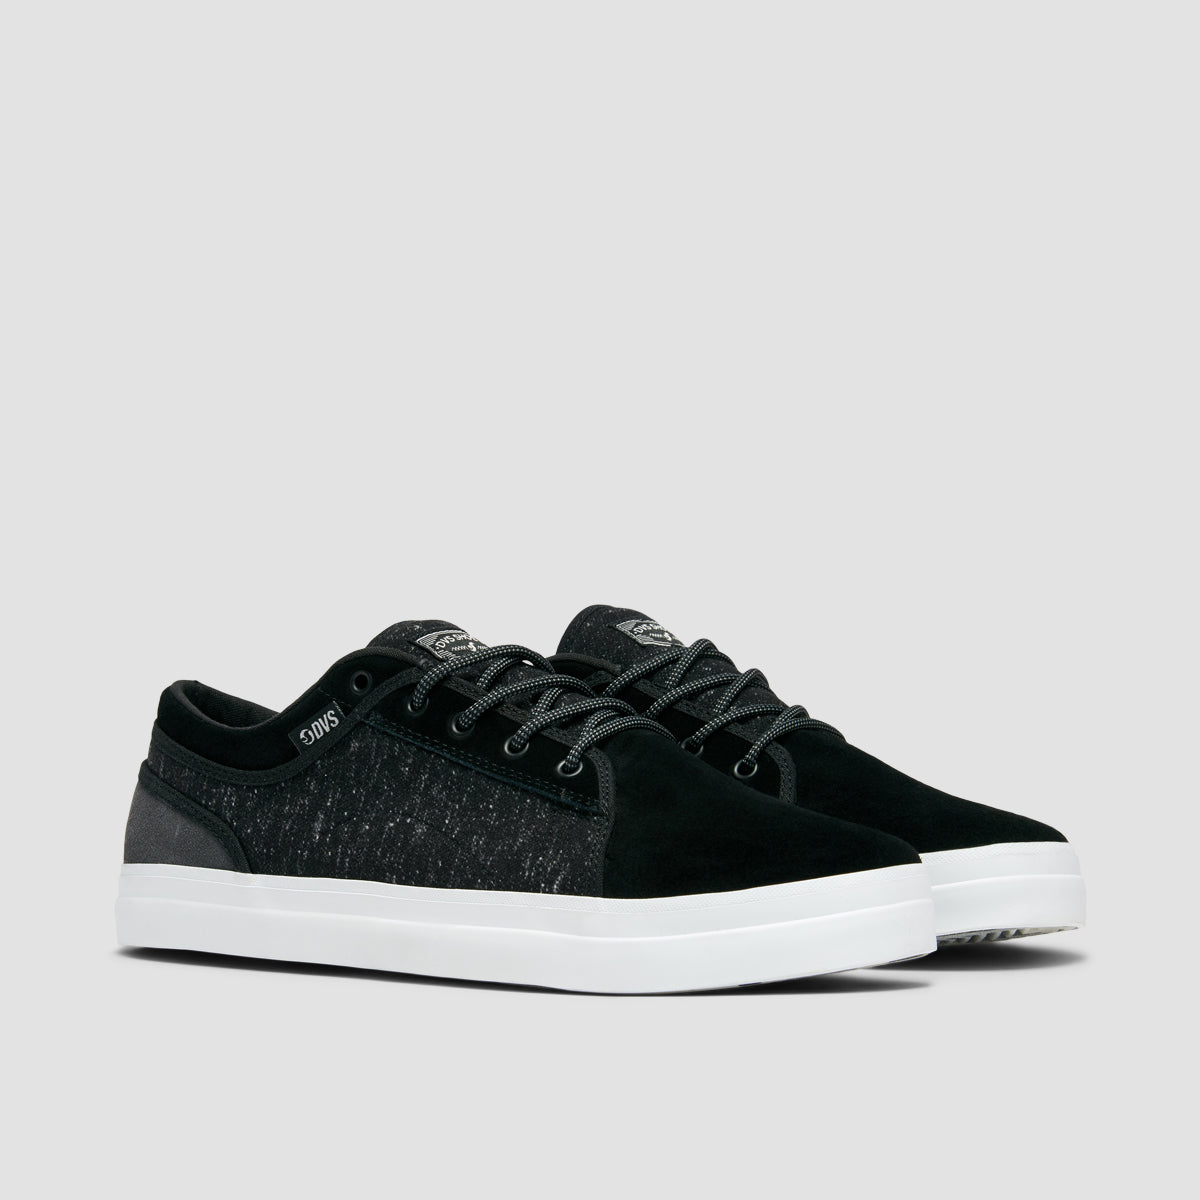 DVS Aversa+ Shoes - Black/Charcoal Textile